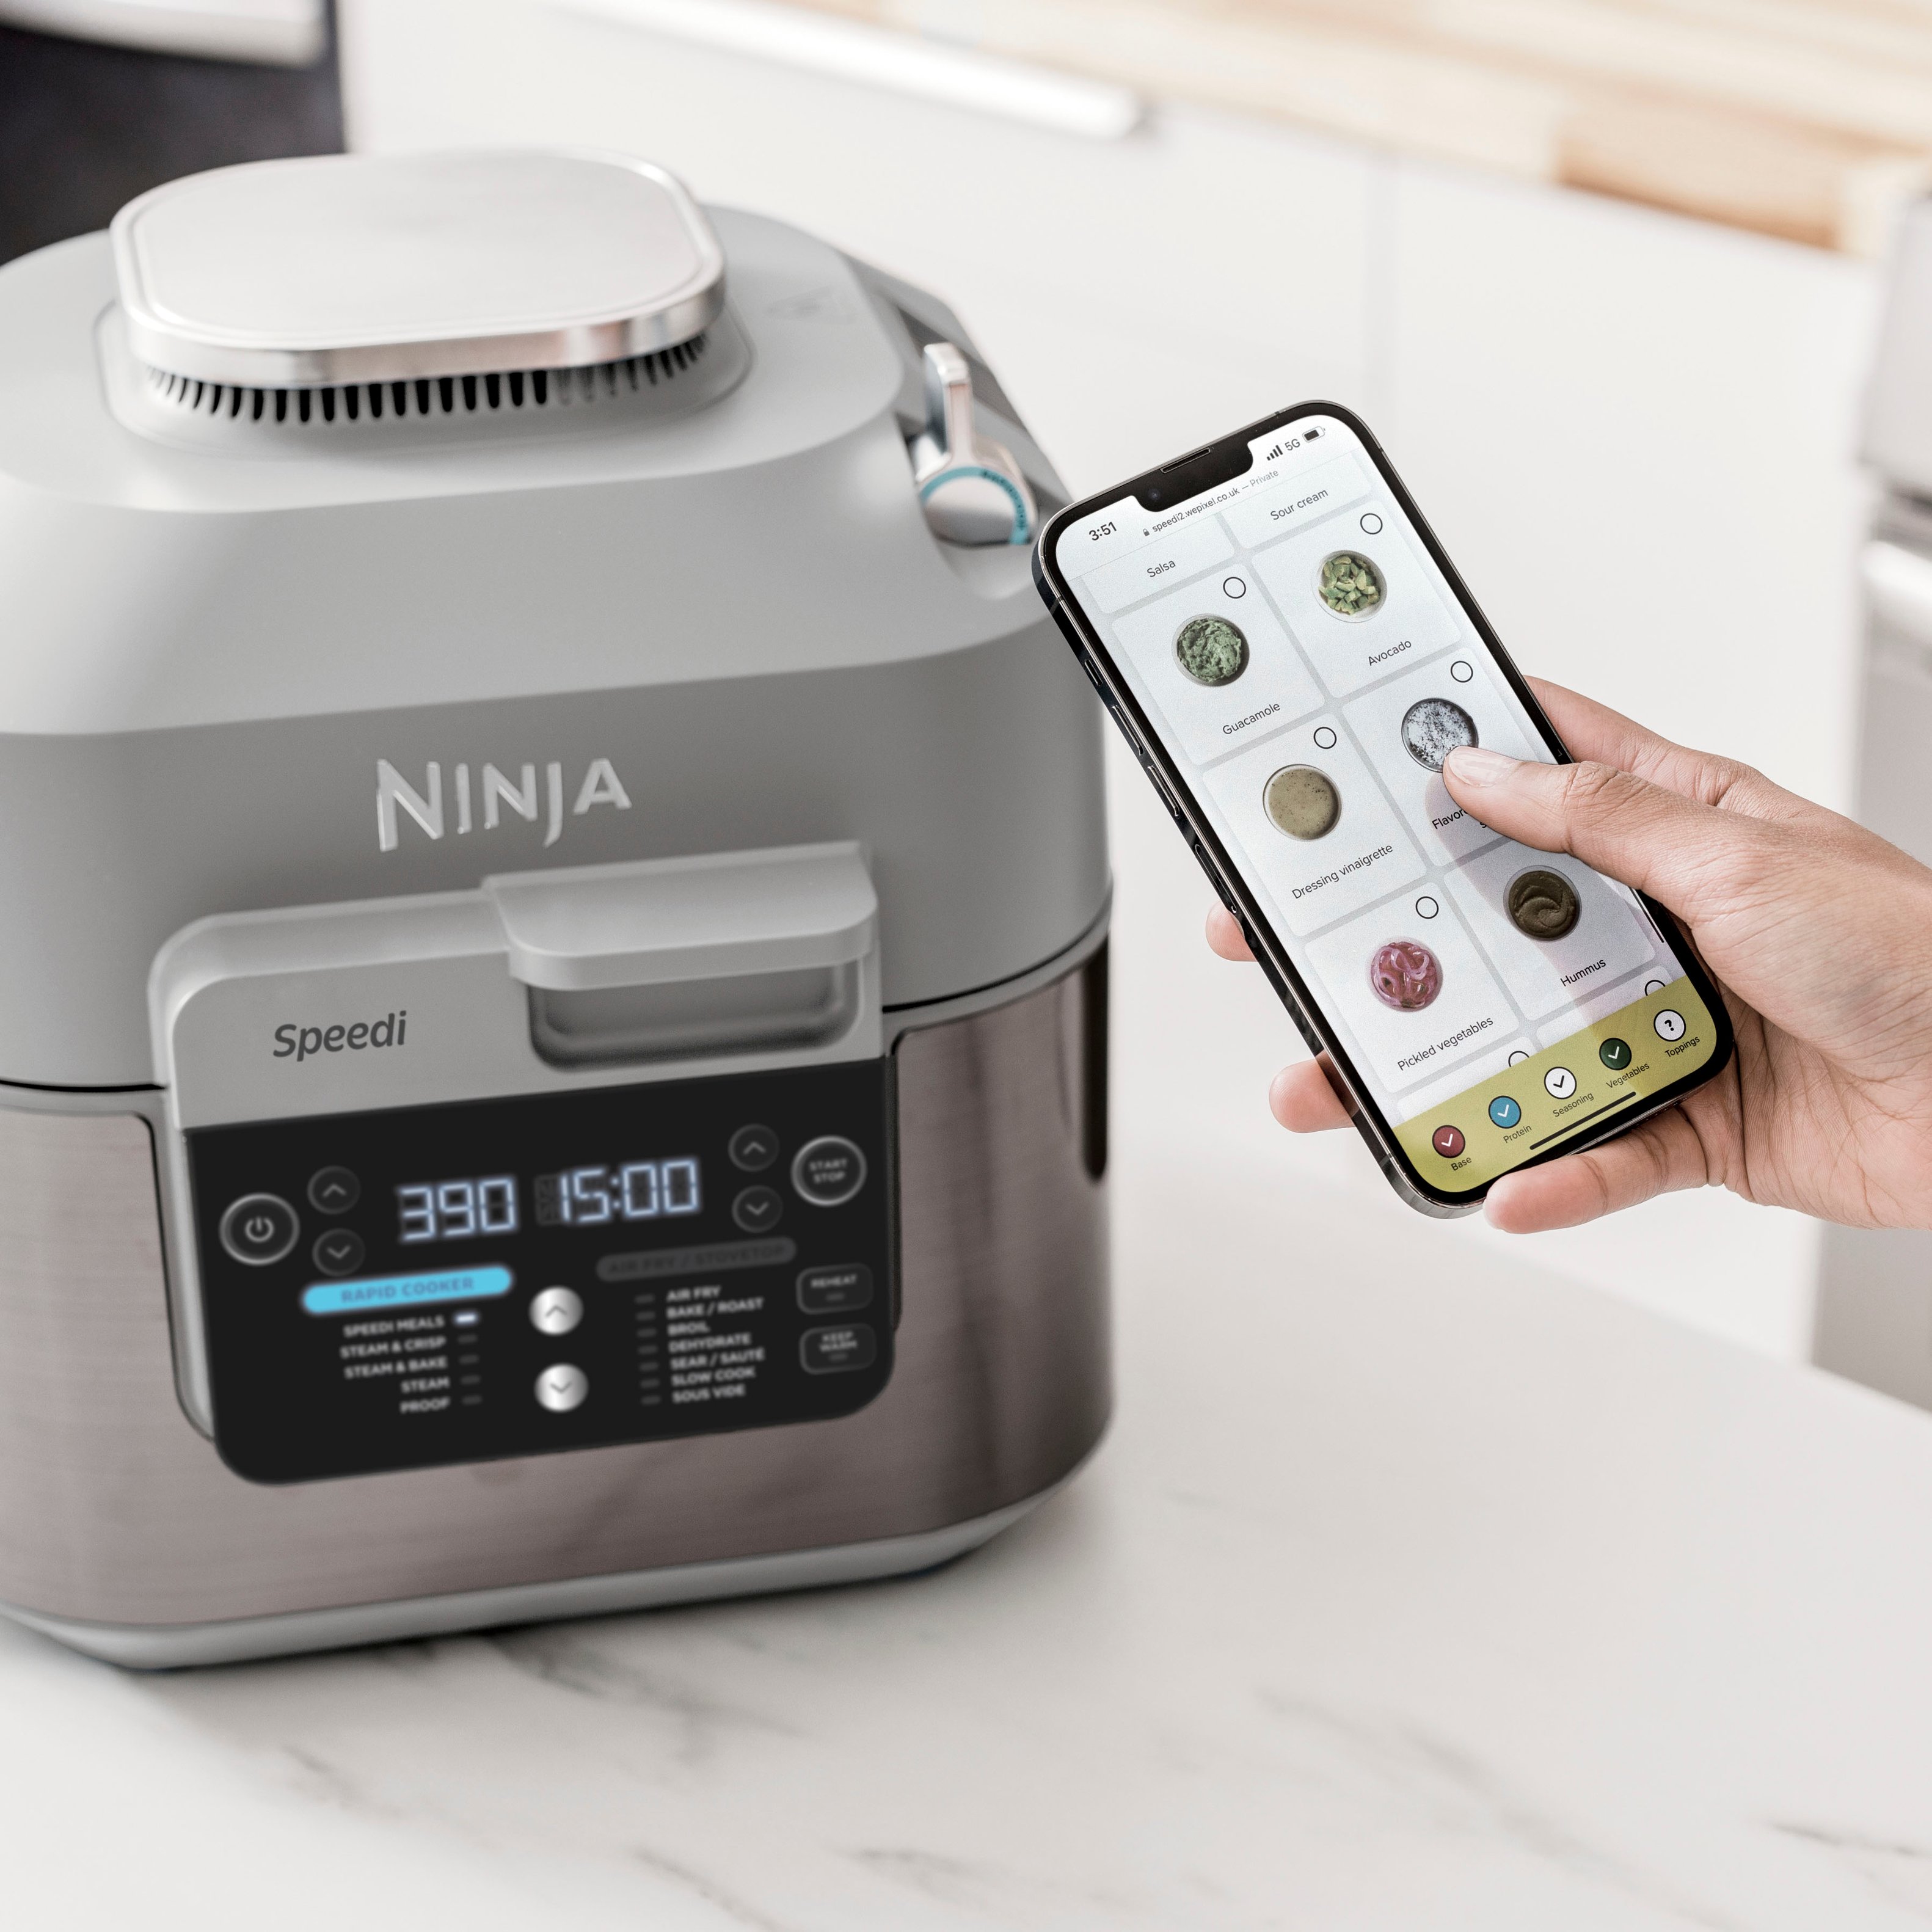 24-Hour Deal: Save $40 on Ninja Speedi Rapid Cooker and Air Fryer